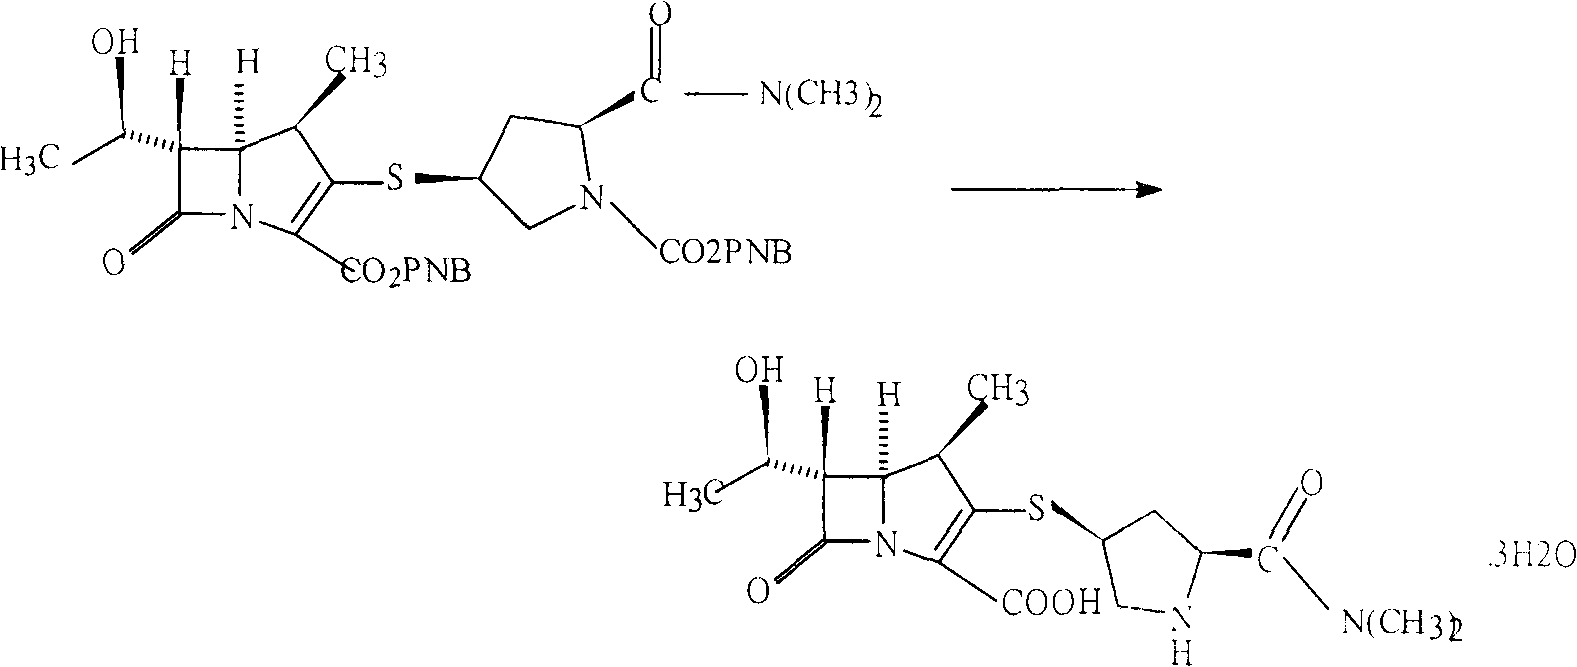 Deprotection method in meropenem synthesis